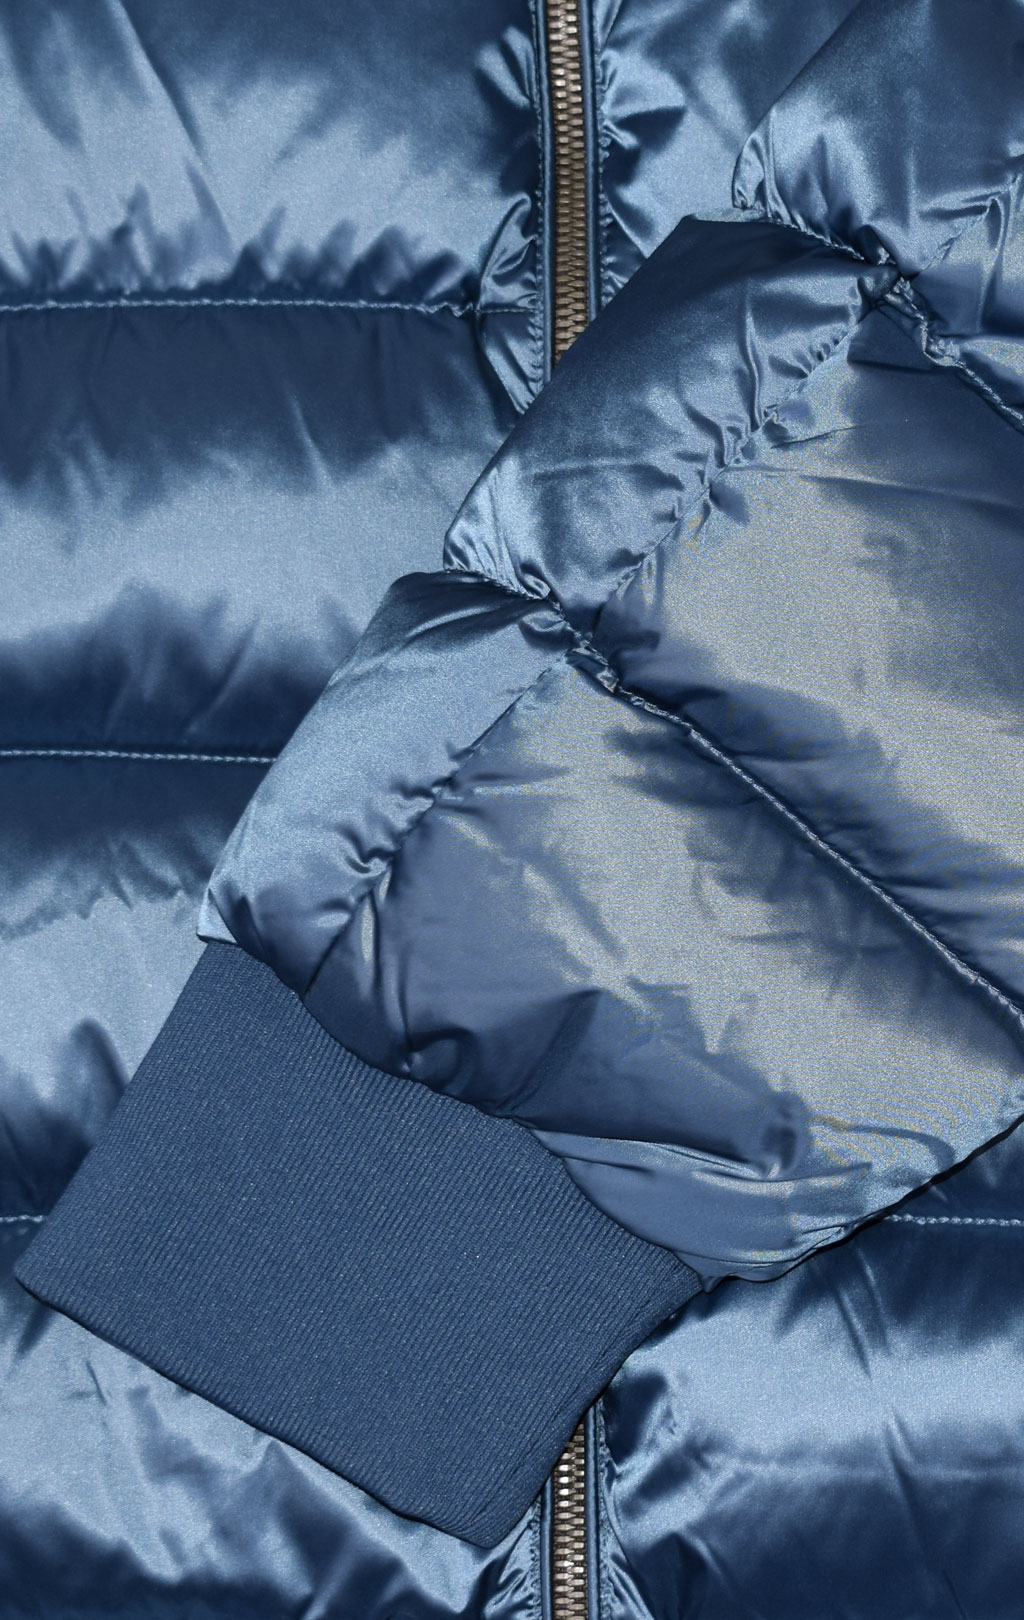 Куртка-пуховик PARAJUMPERS PHARRELL FW 21/22 mallard blue 